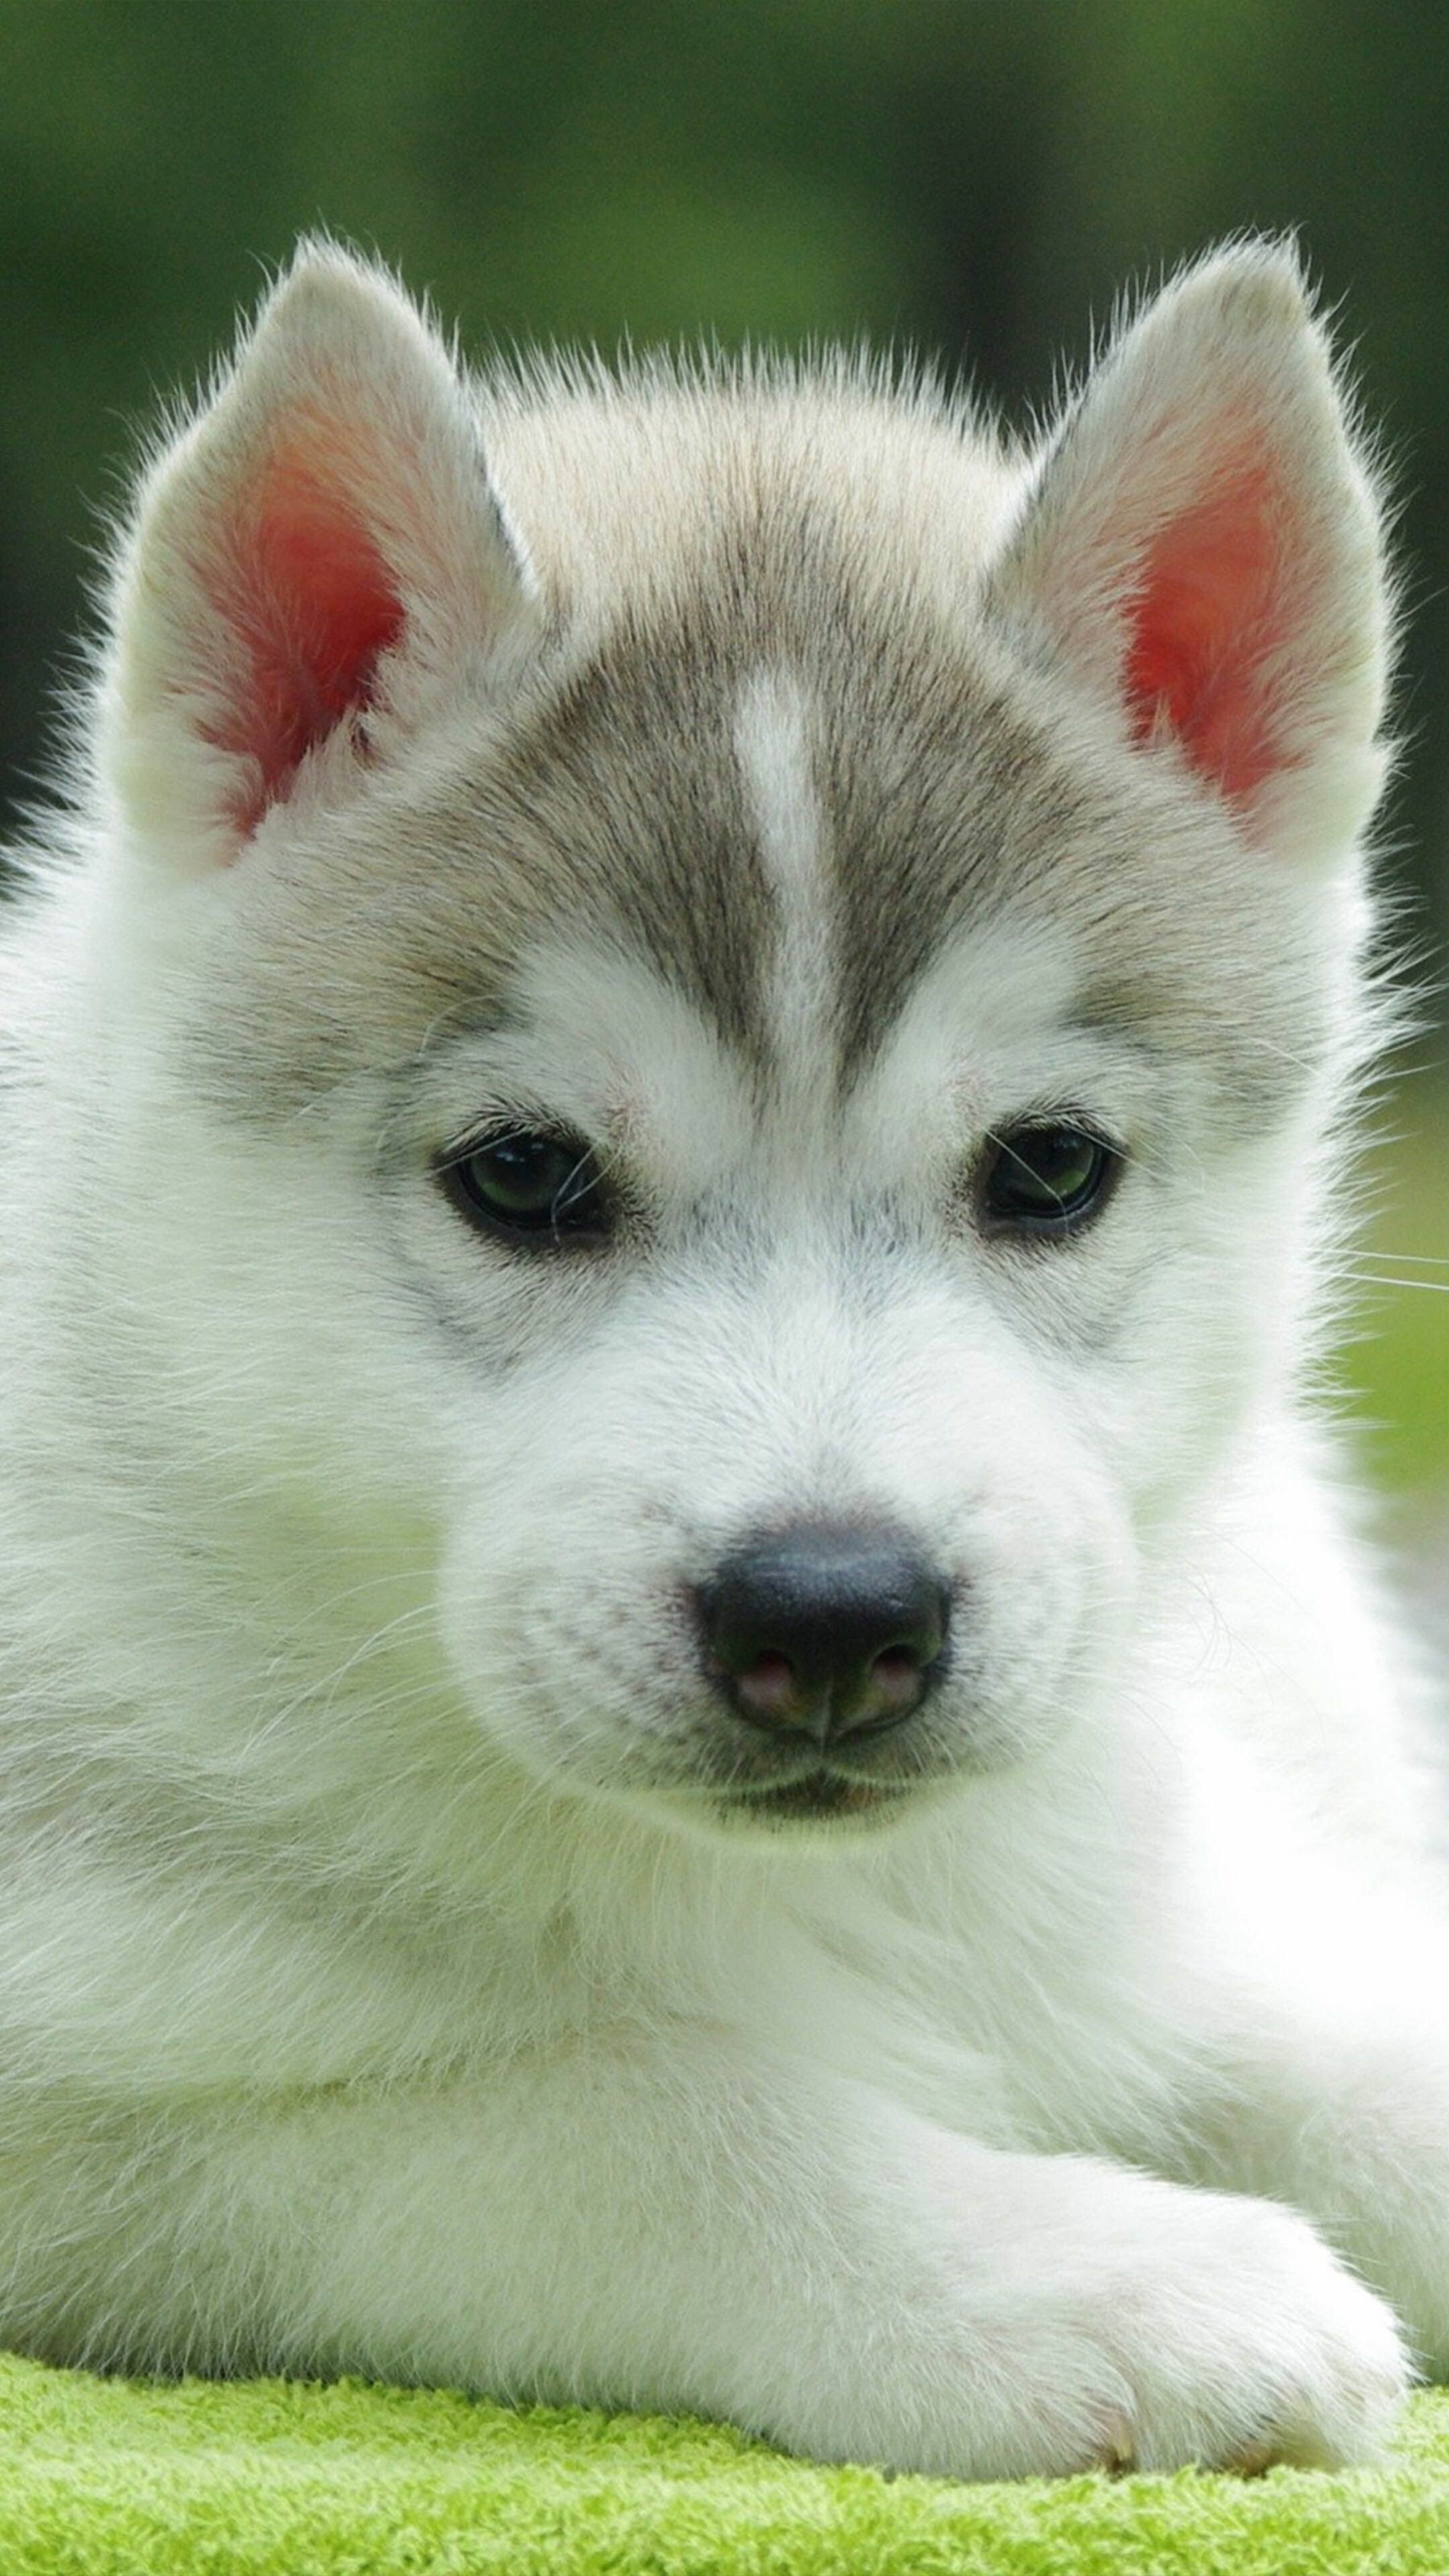 Siberian Husky, Cute puppy, 4K Ultra HD, Mobile wallpaper, 2160x3840 4K Phone